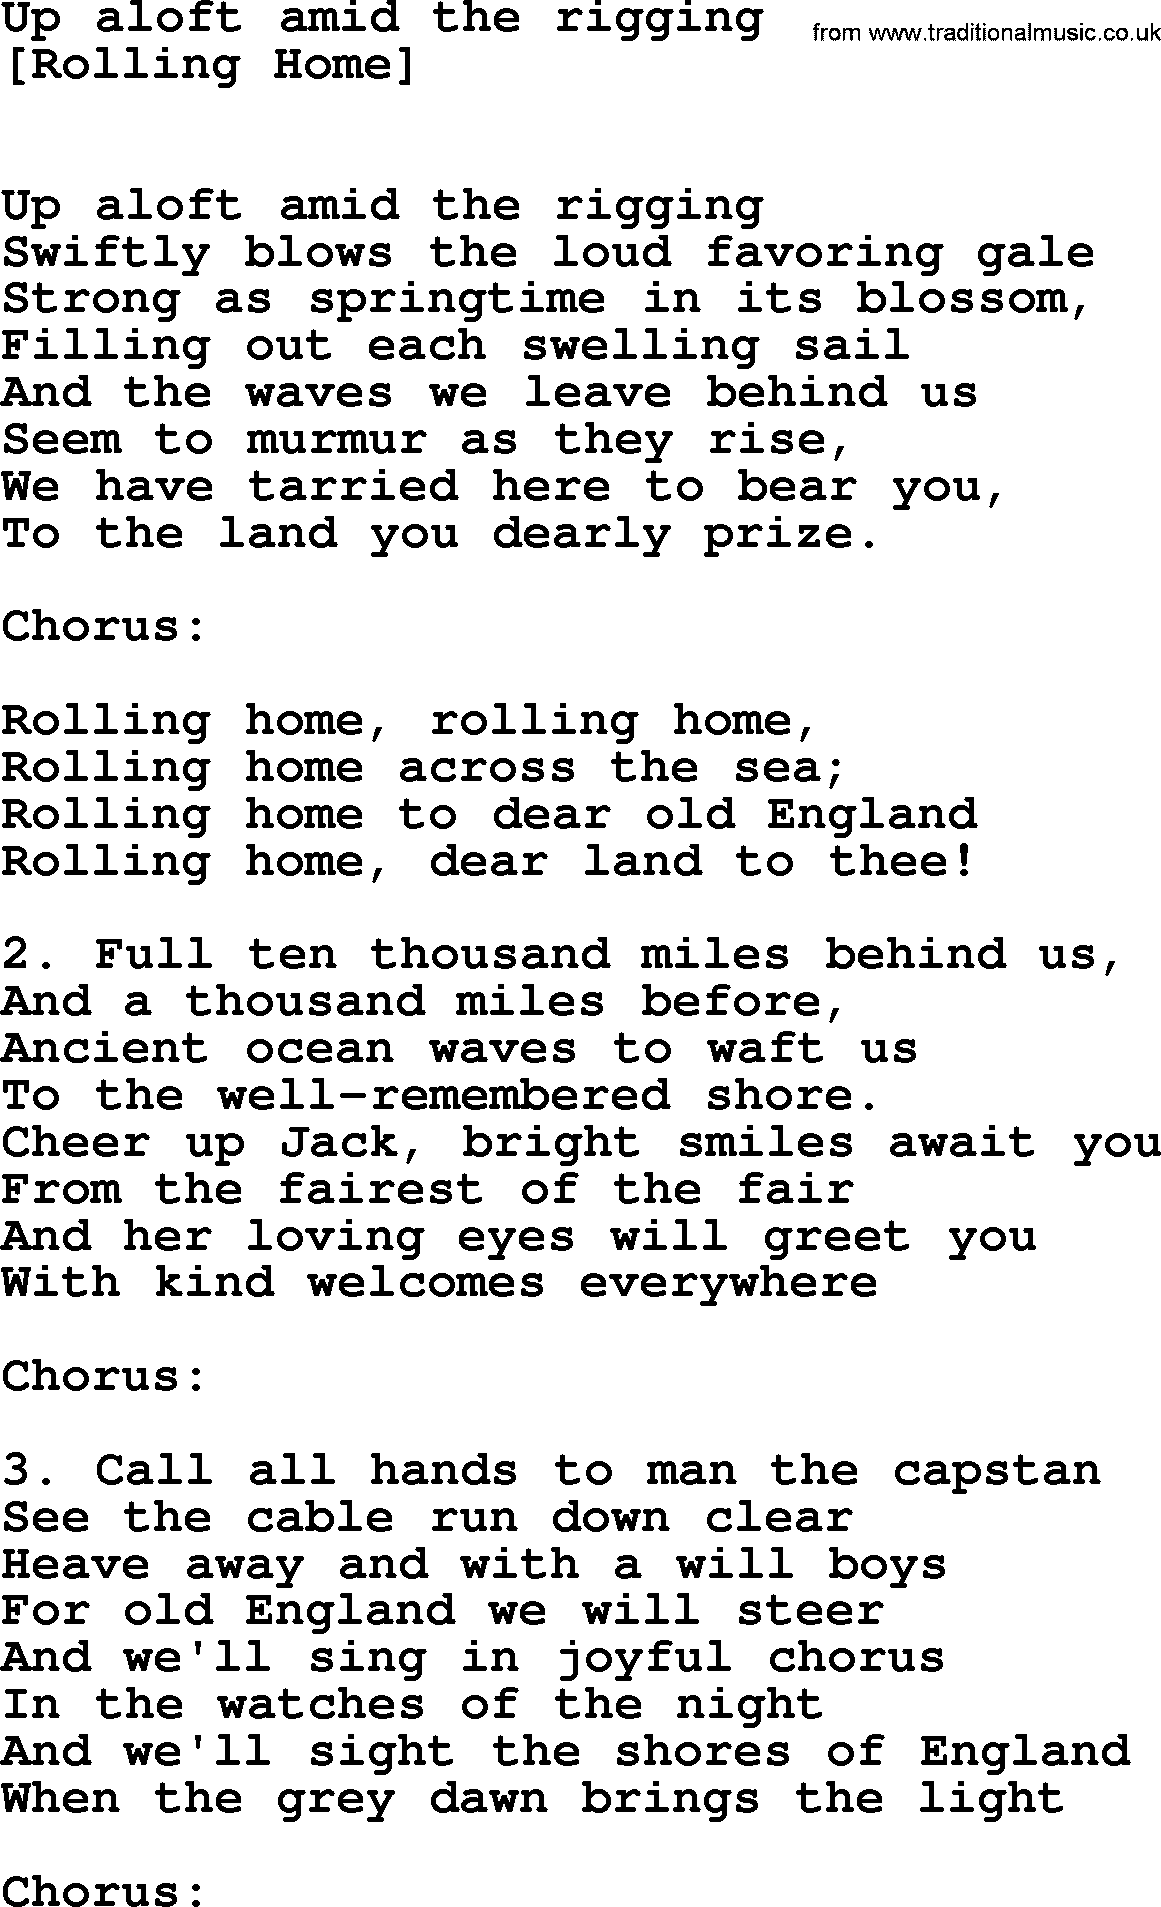 Old English Song: Up Aloft Amid The Rigging lyrics